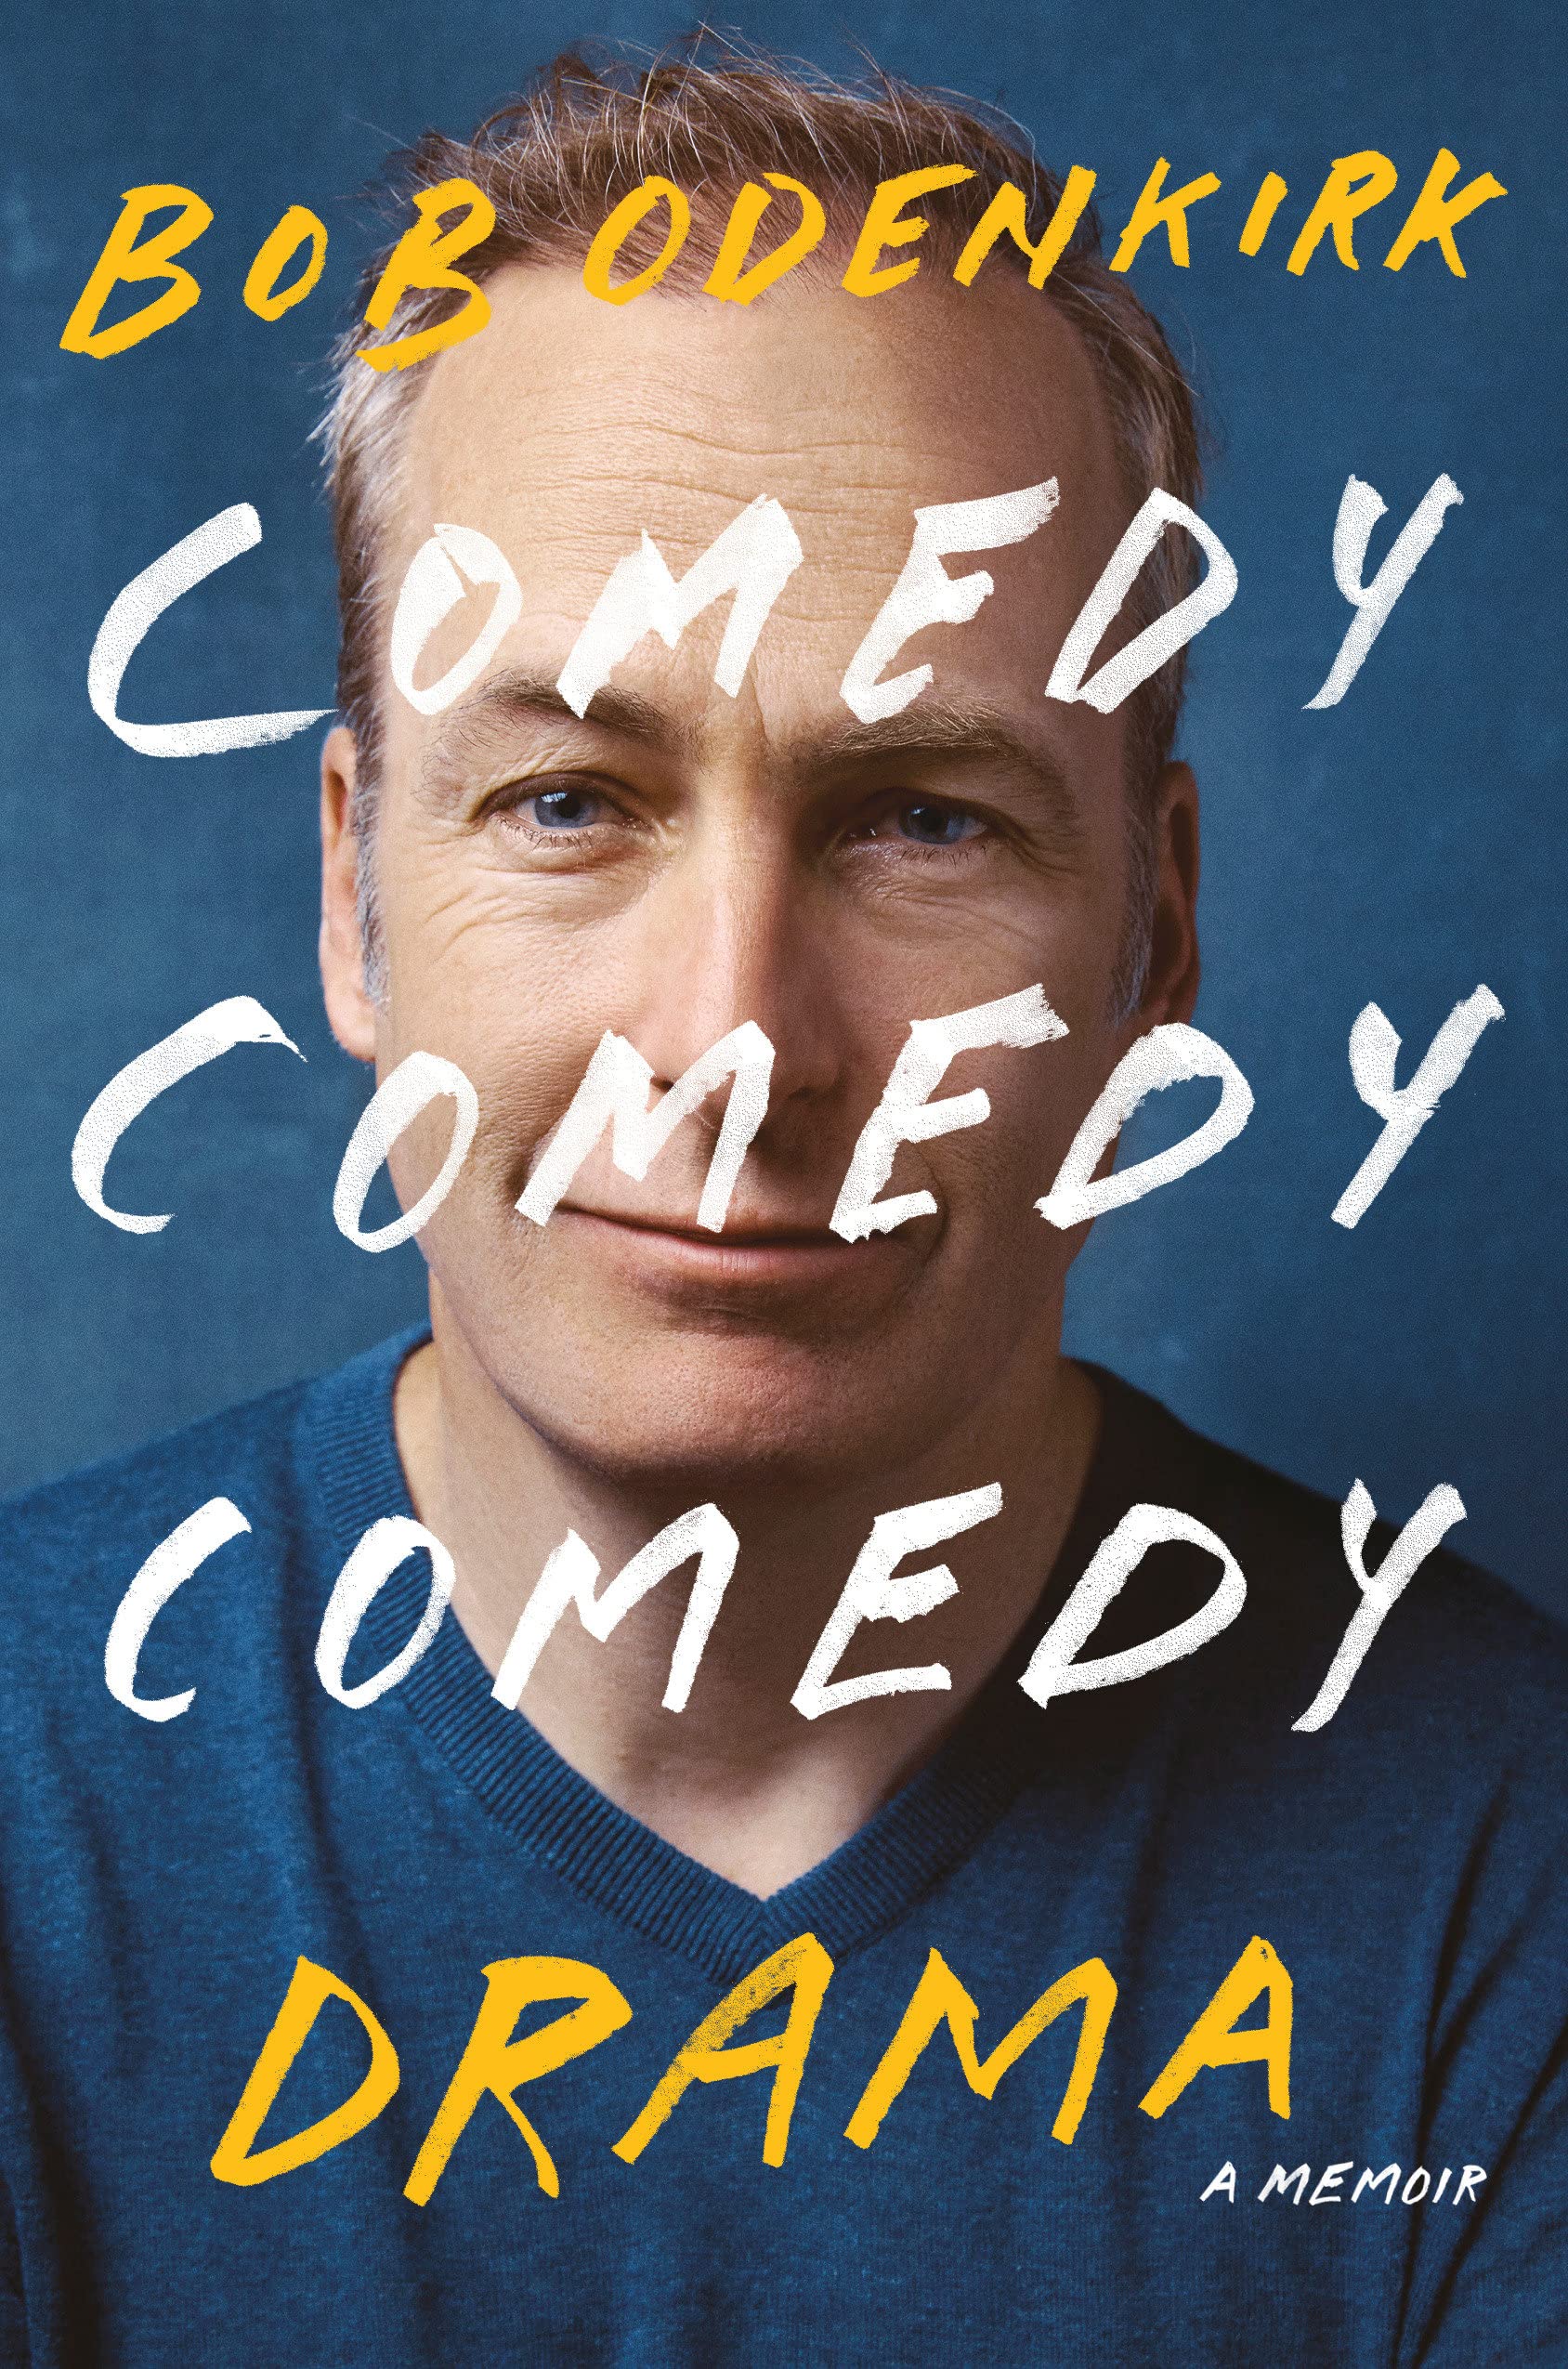 Bob Odenkirk-  Comedy Comedy Comedy Drama: A Memoir